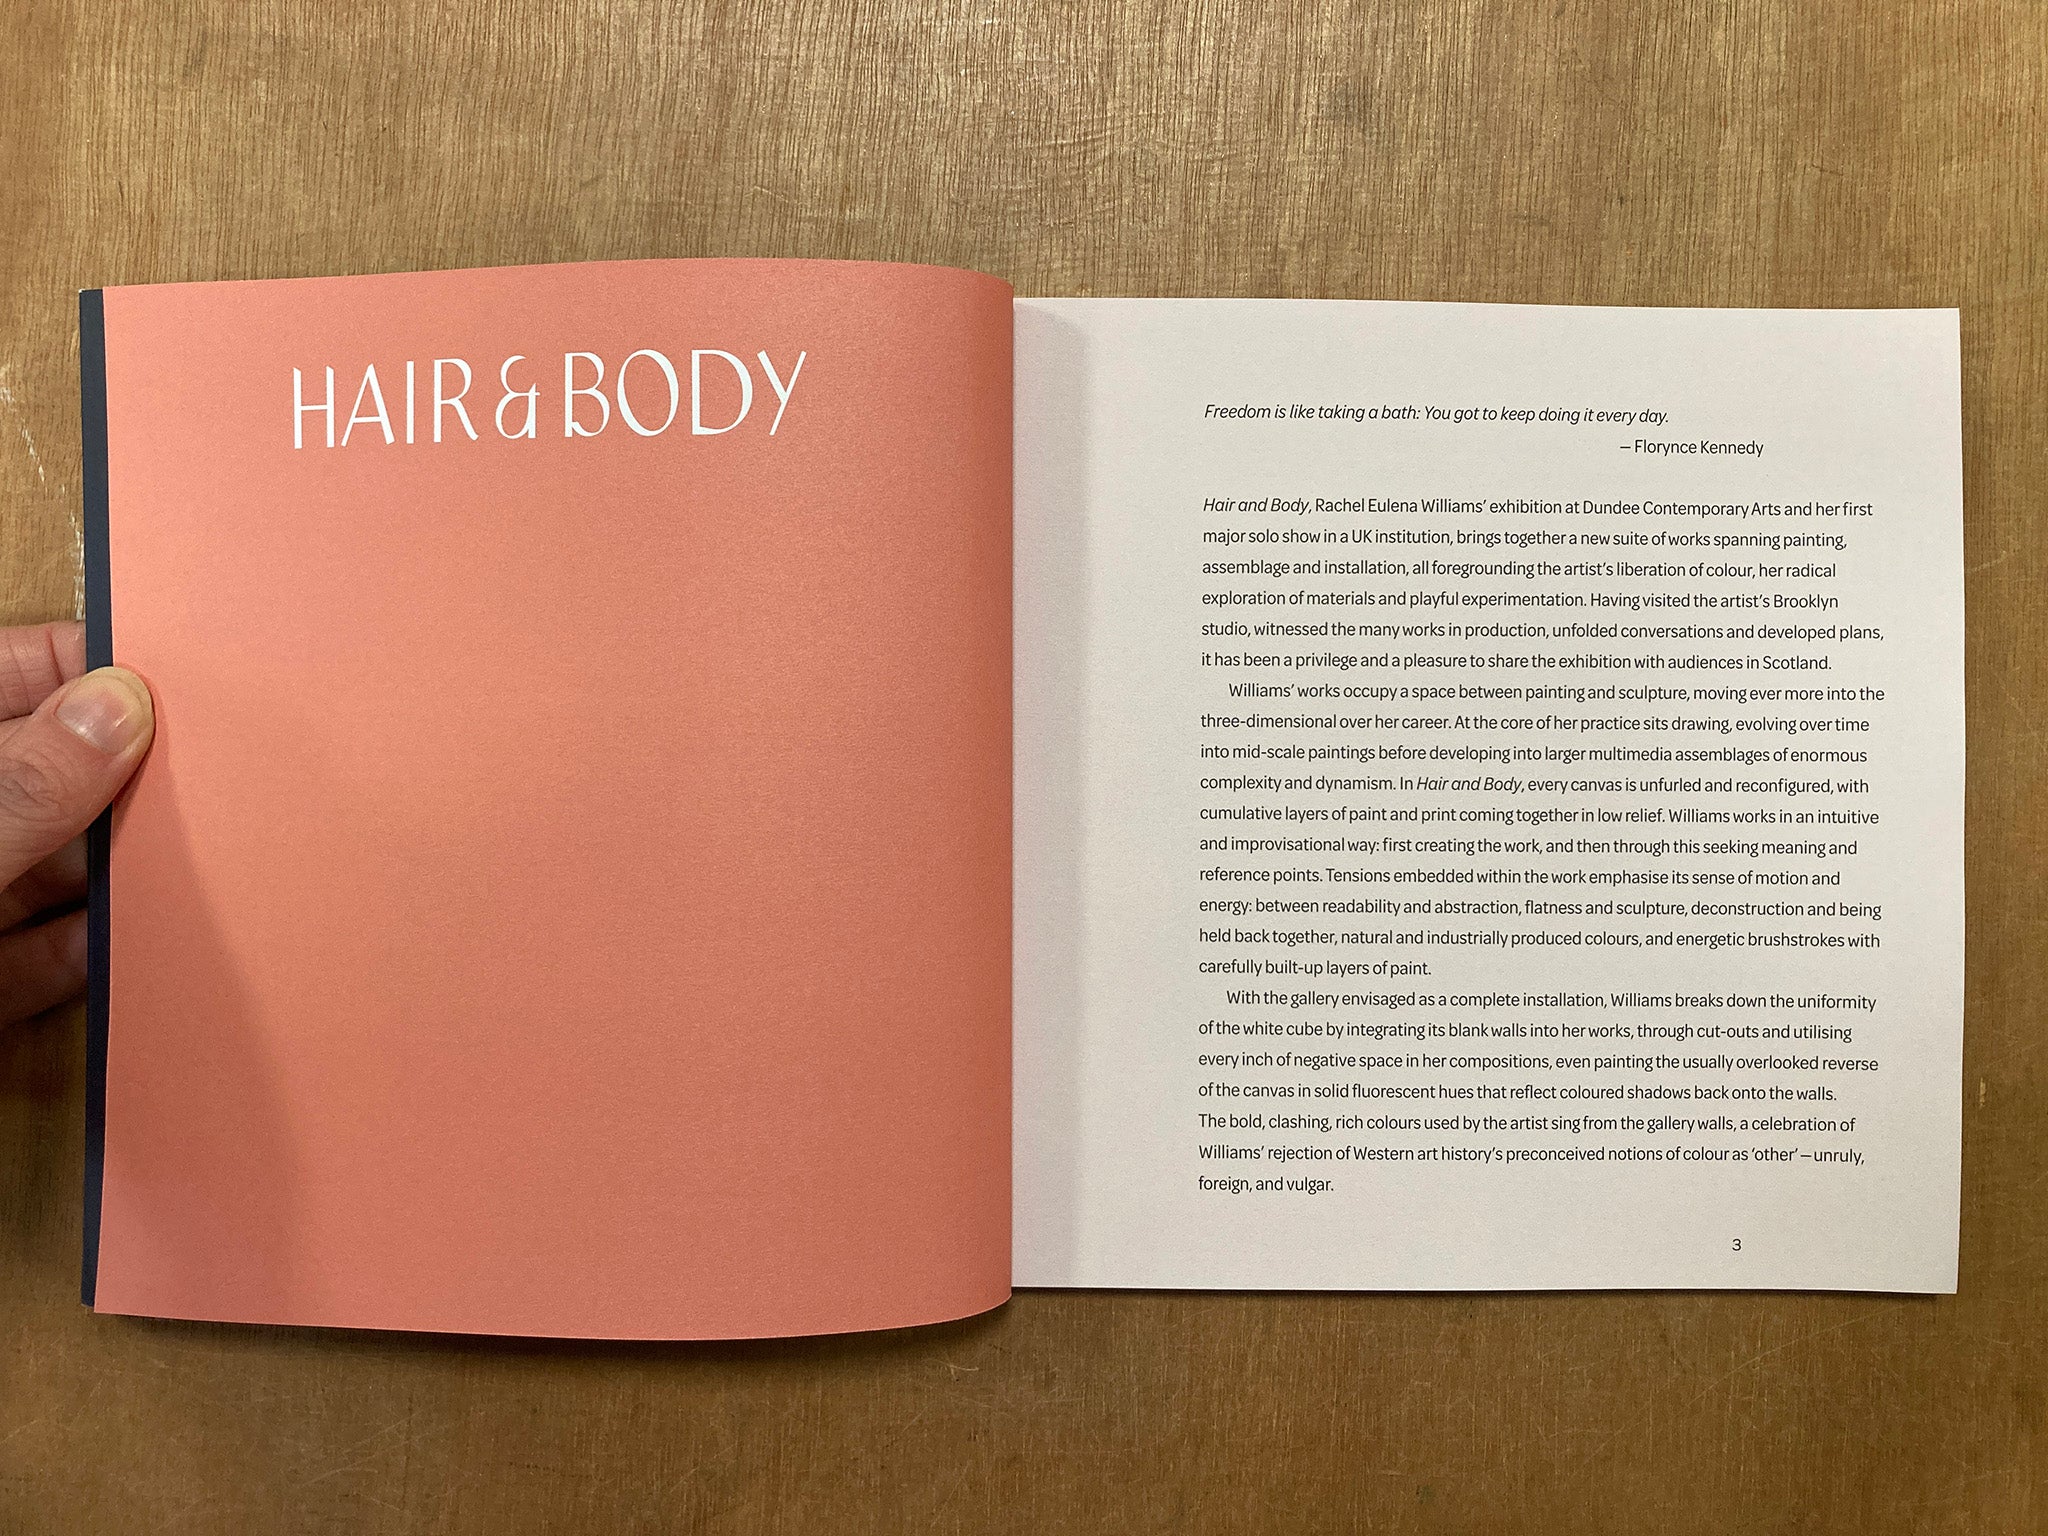 HAIR & BODY by Rachel Eulena Williams